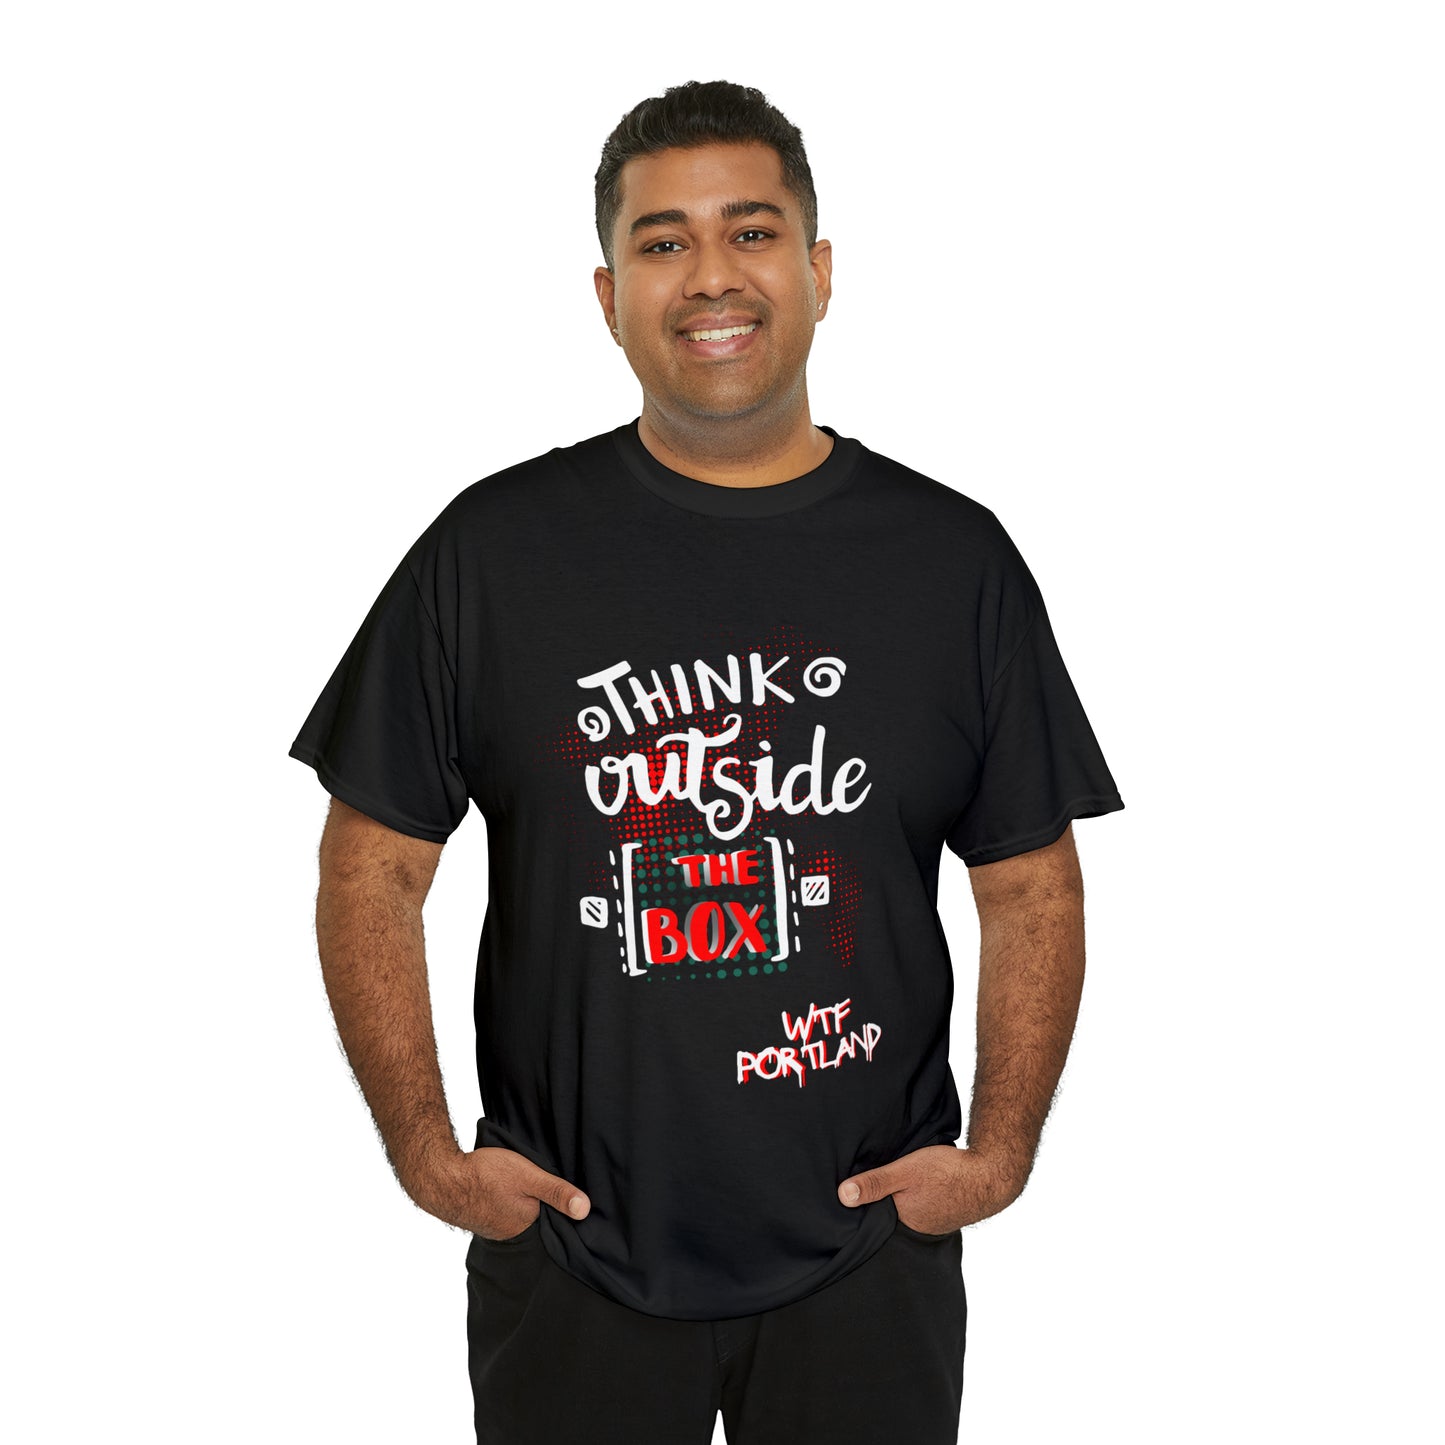 WTF PORTLAND - "Think Outside The Box" T-Shirt